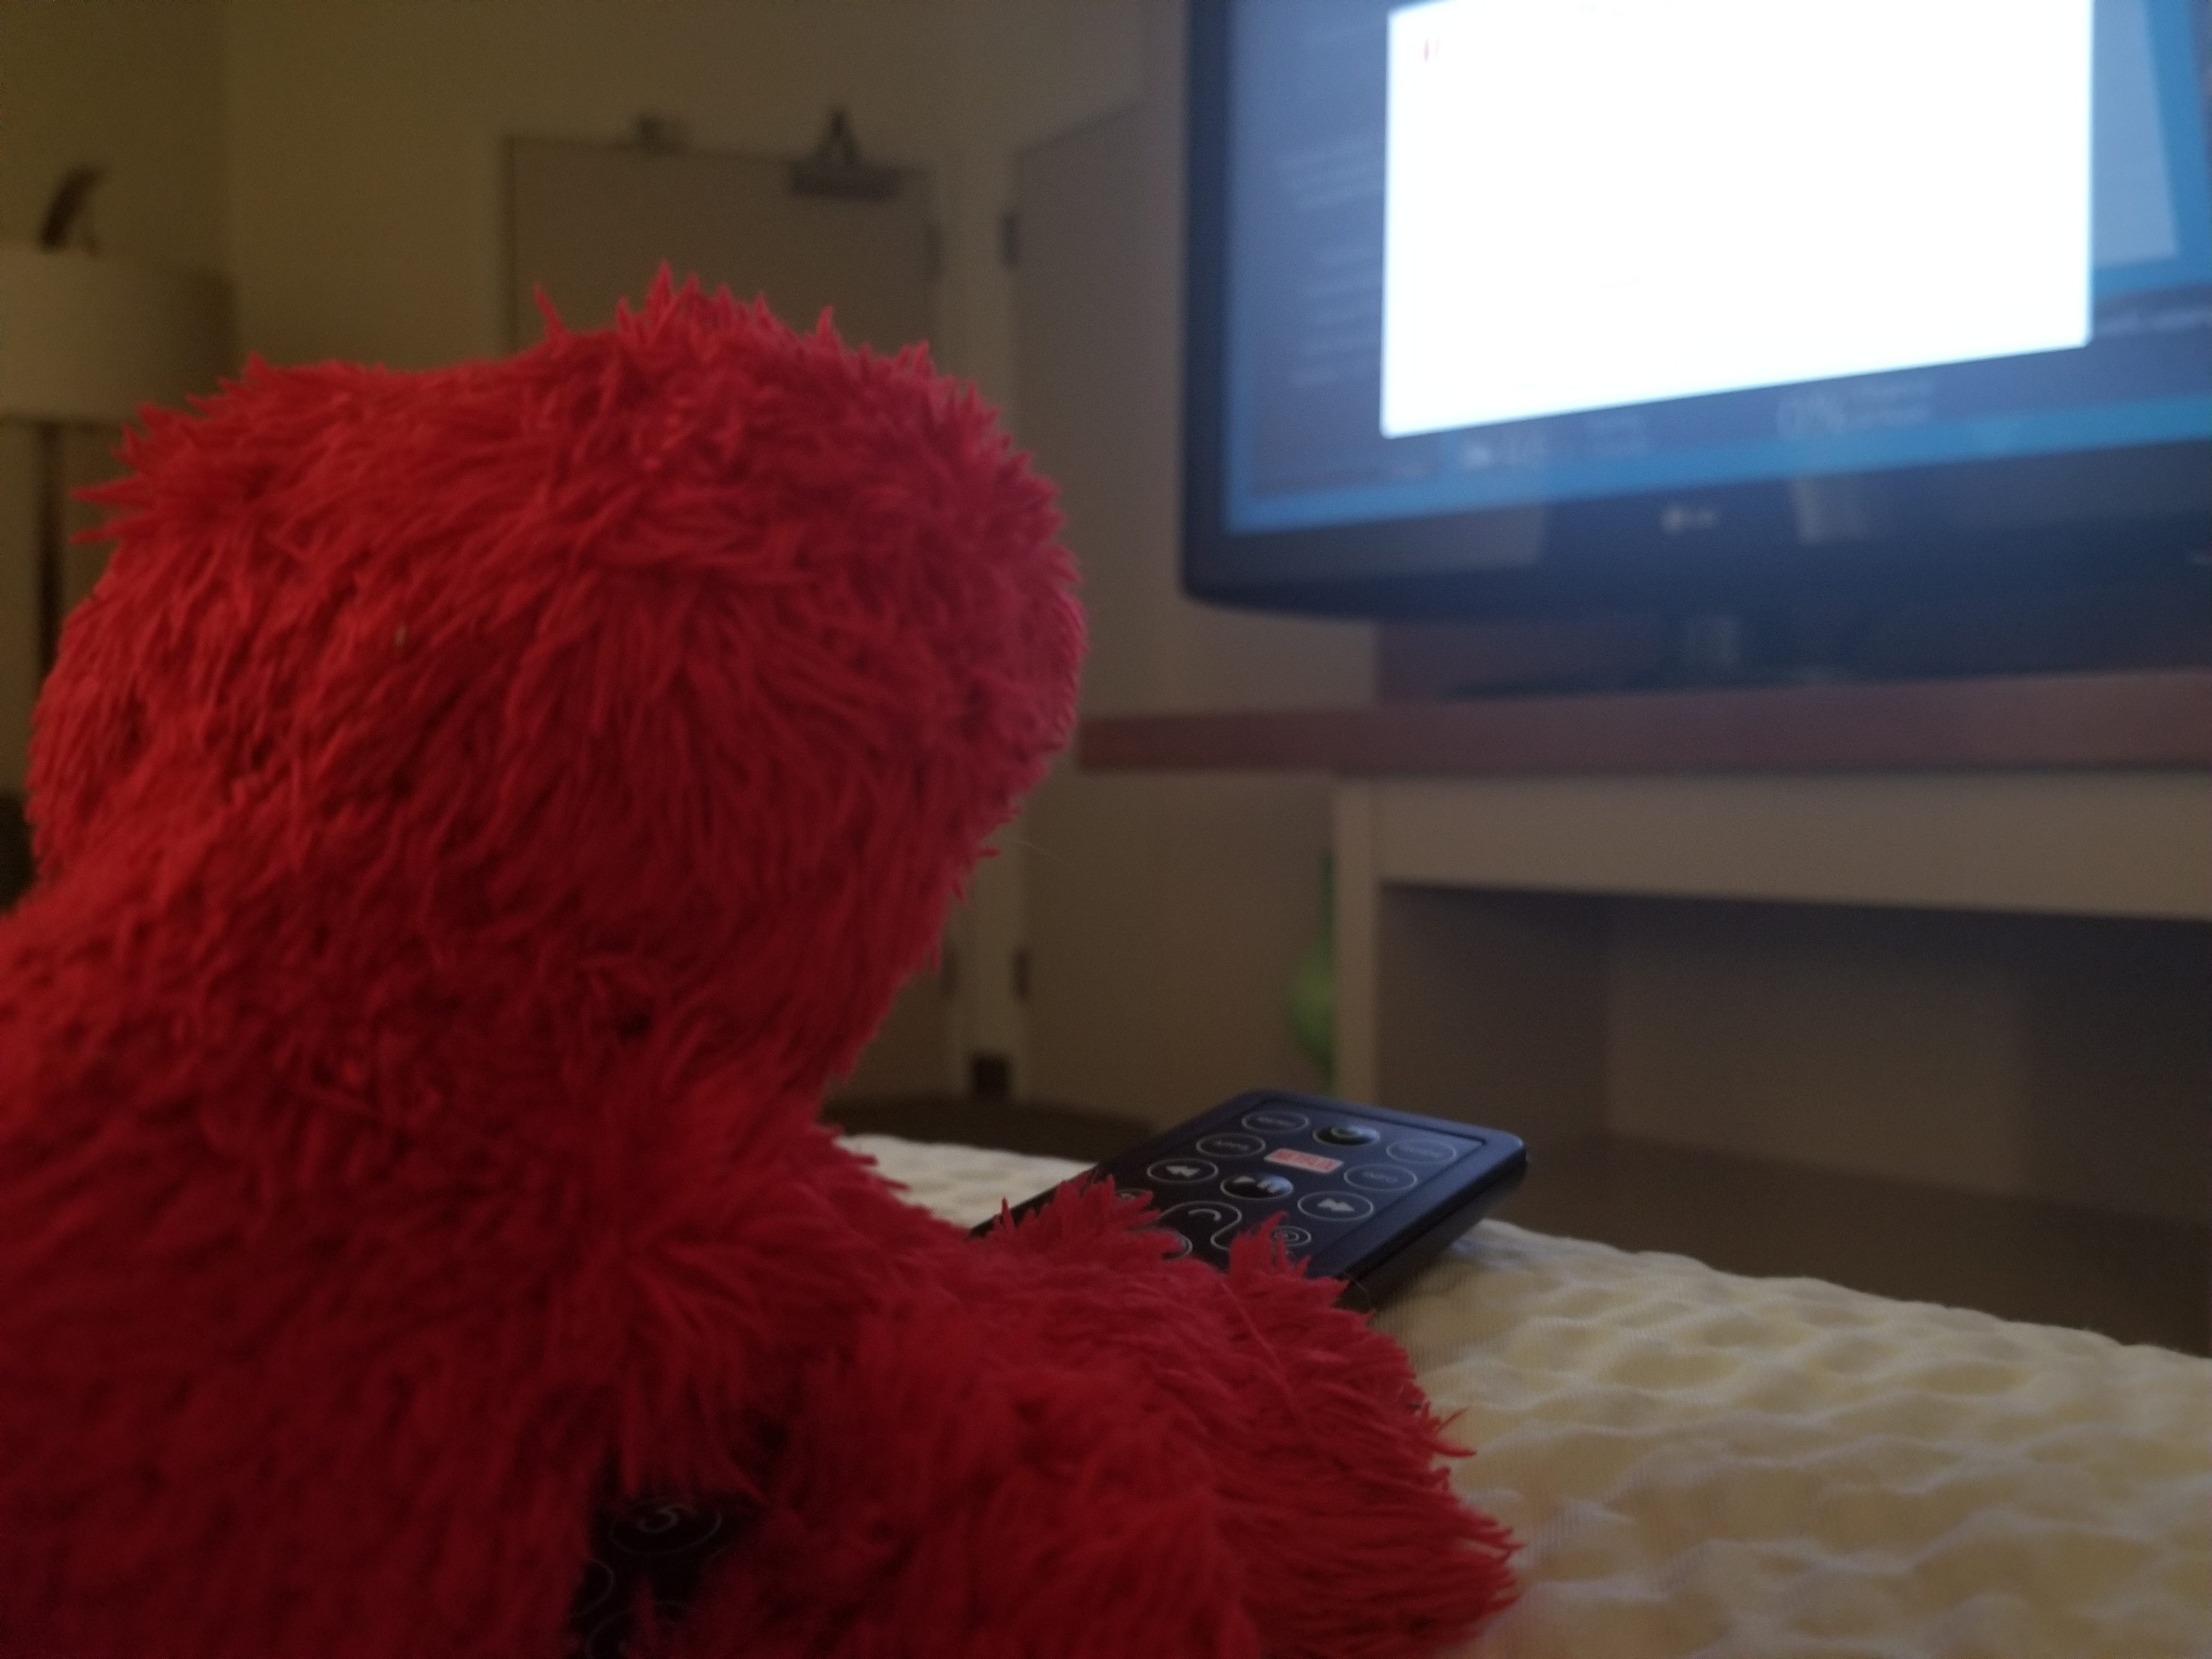 Elmo Watches some TV